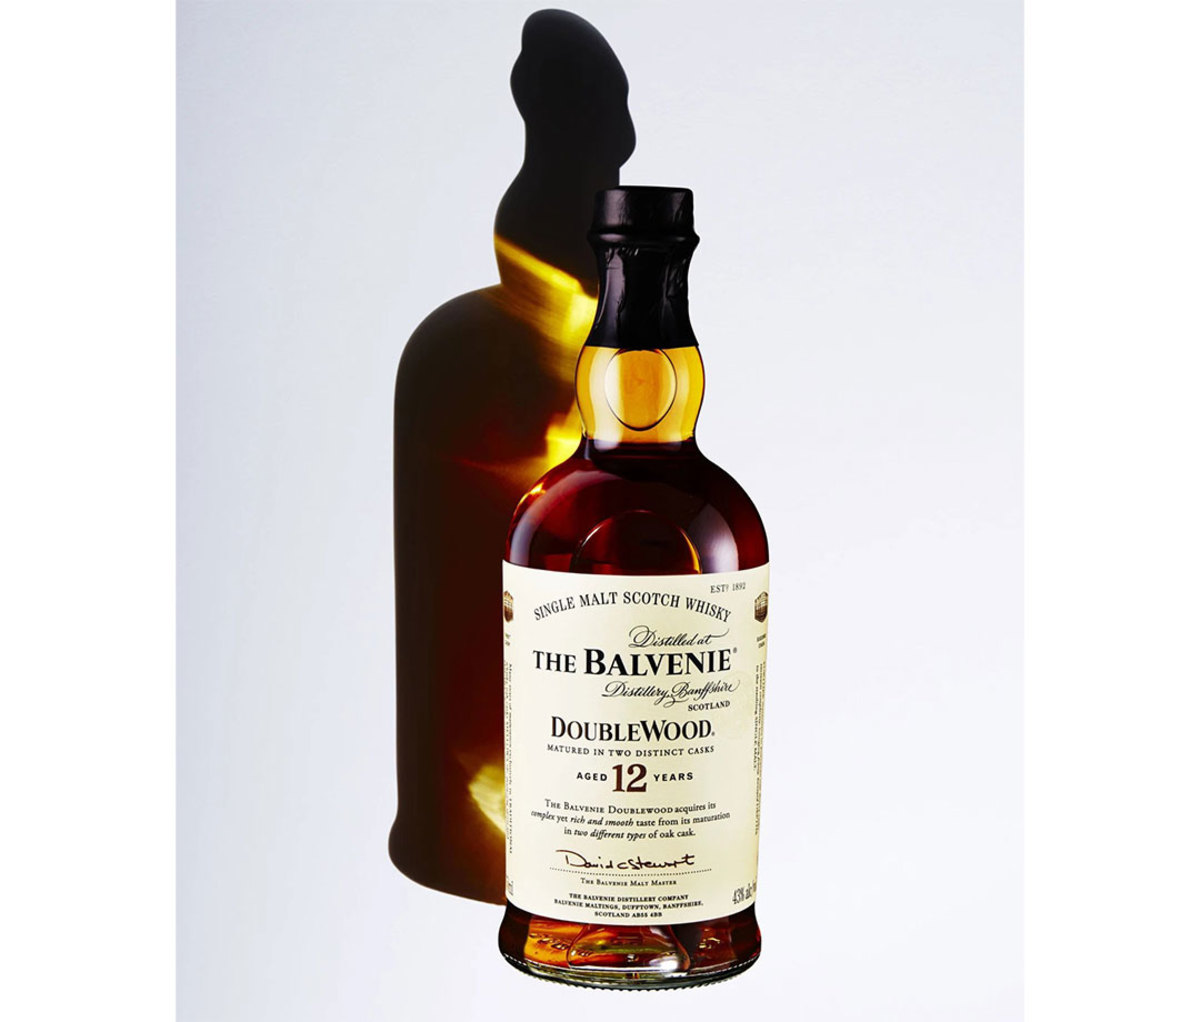 Glenmorangie Signet Single Malt Scotch Whisky - Walsh's Shebeen